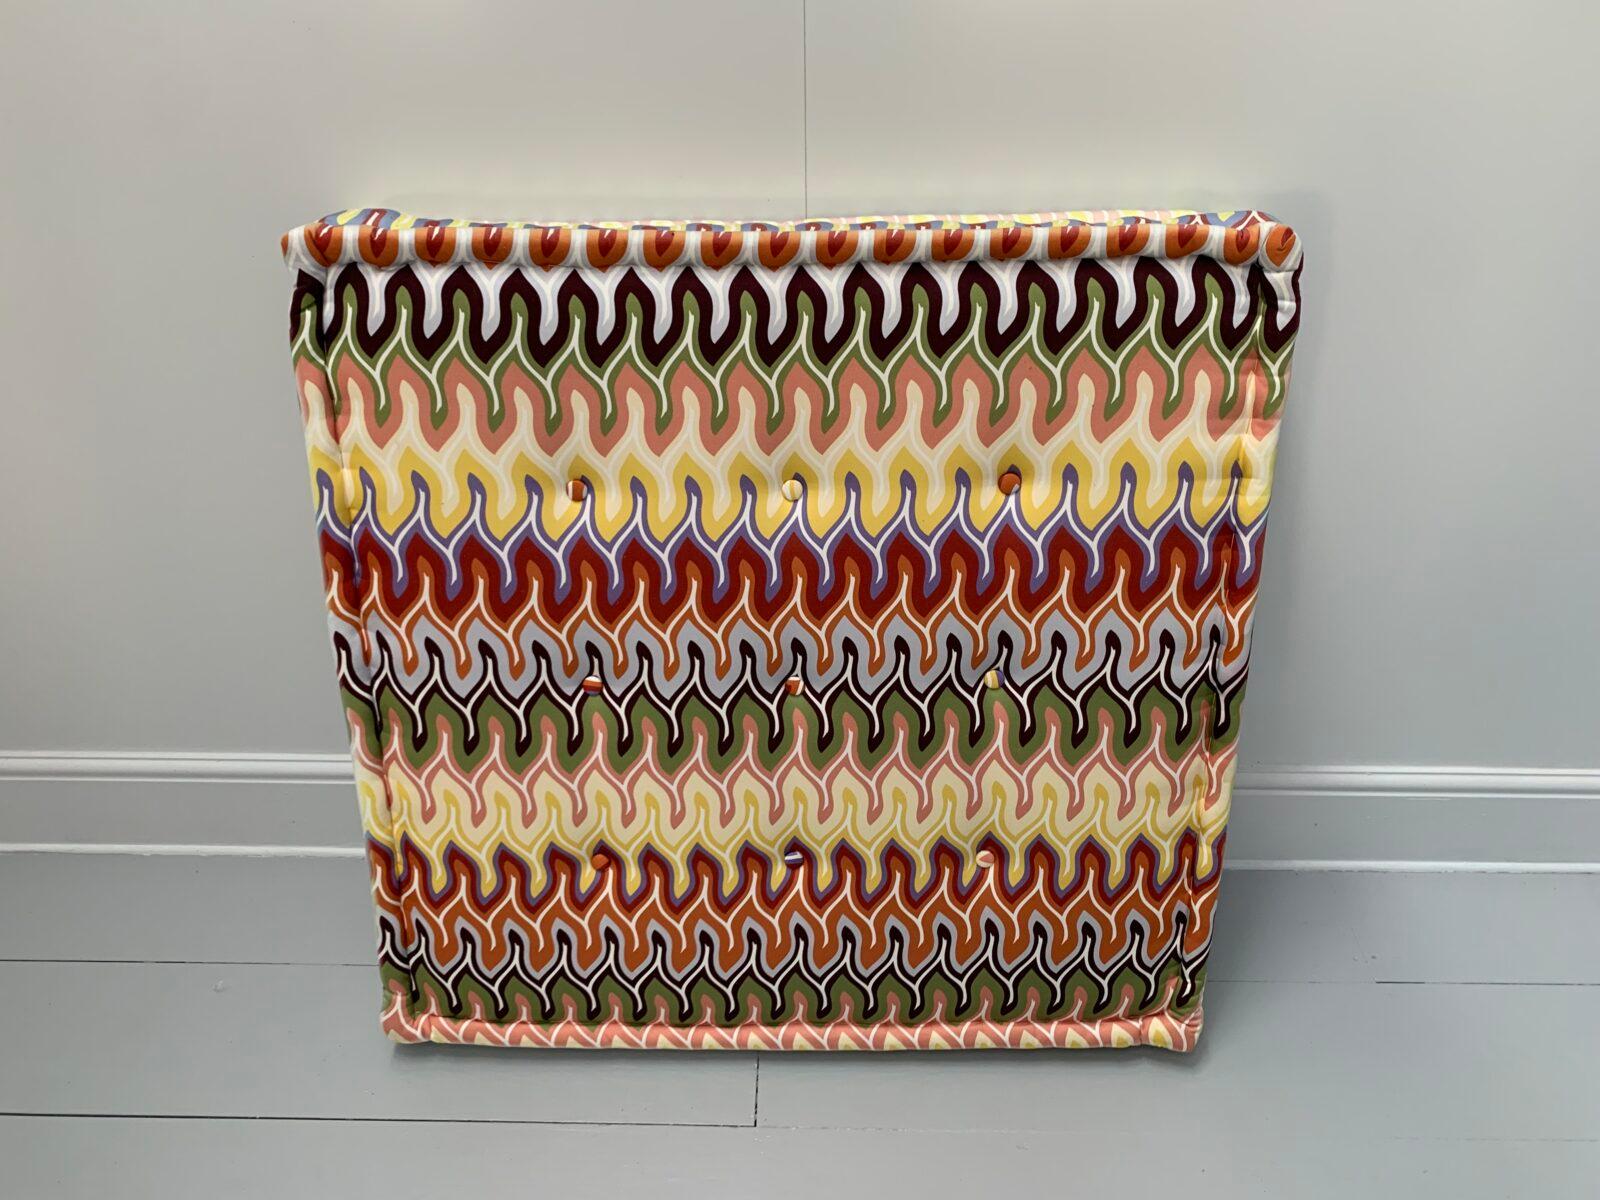 Roche Bobois “Mah Jong” Sofa & Table – In Missoni Fabric For Sale 7